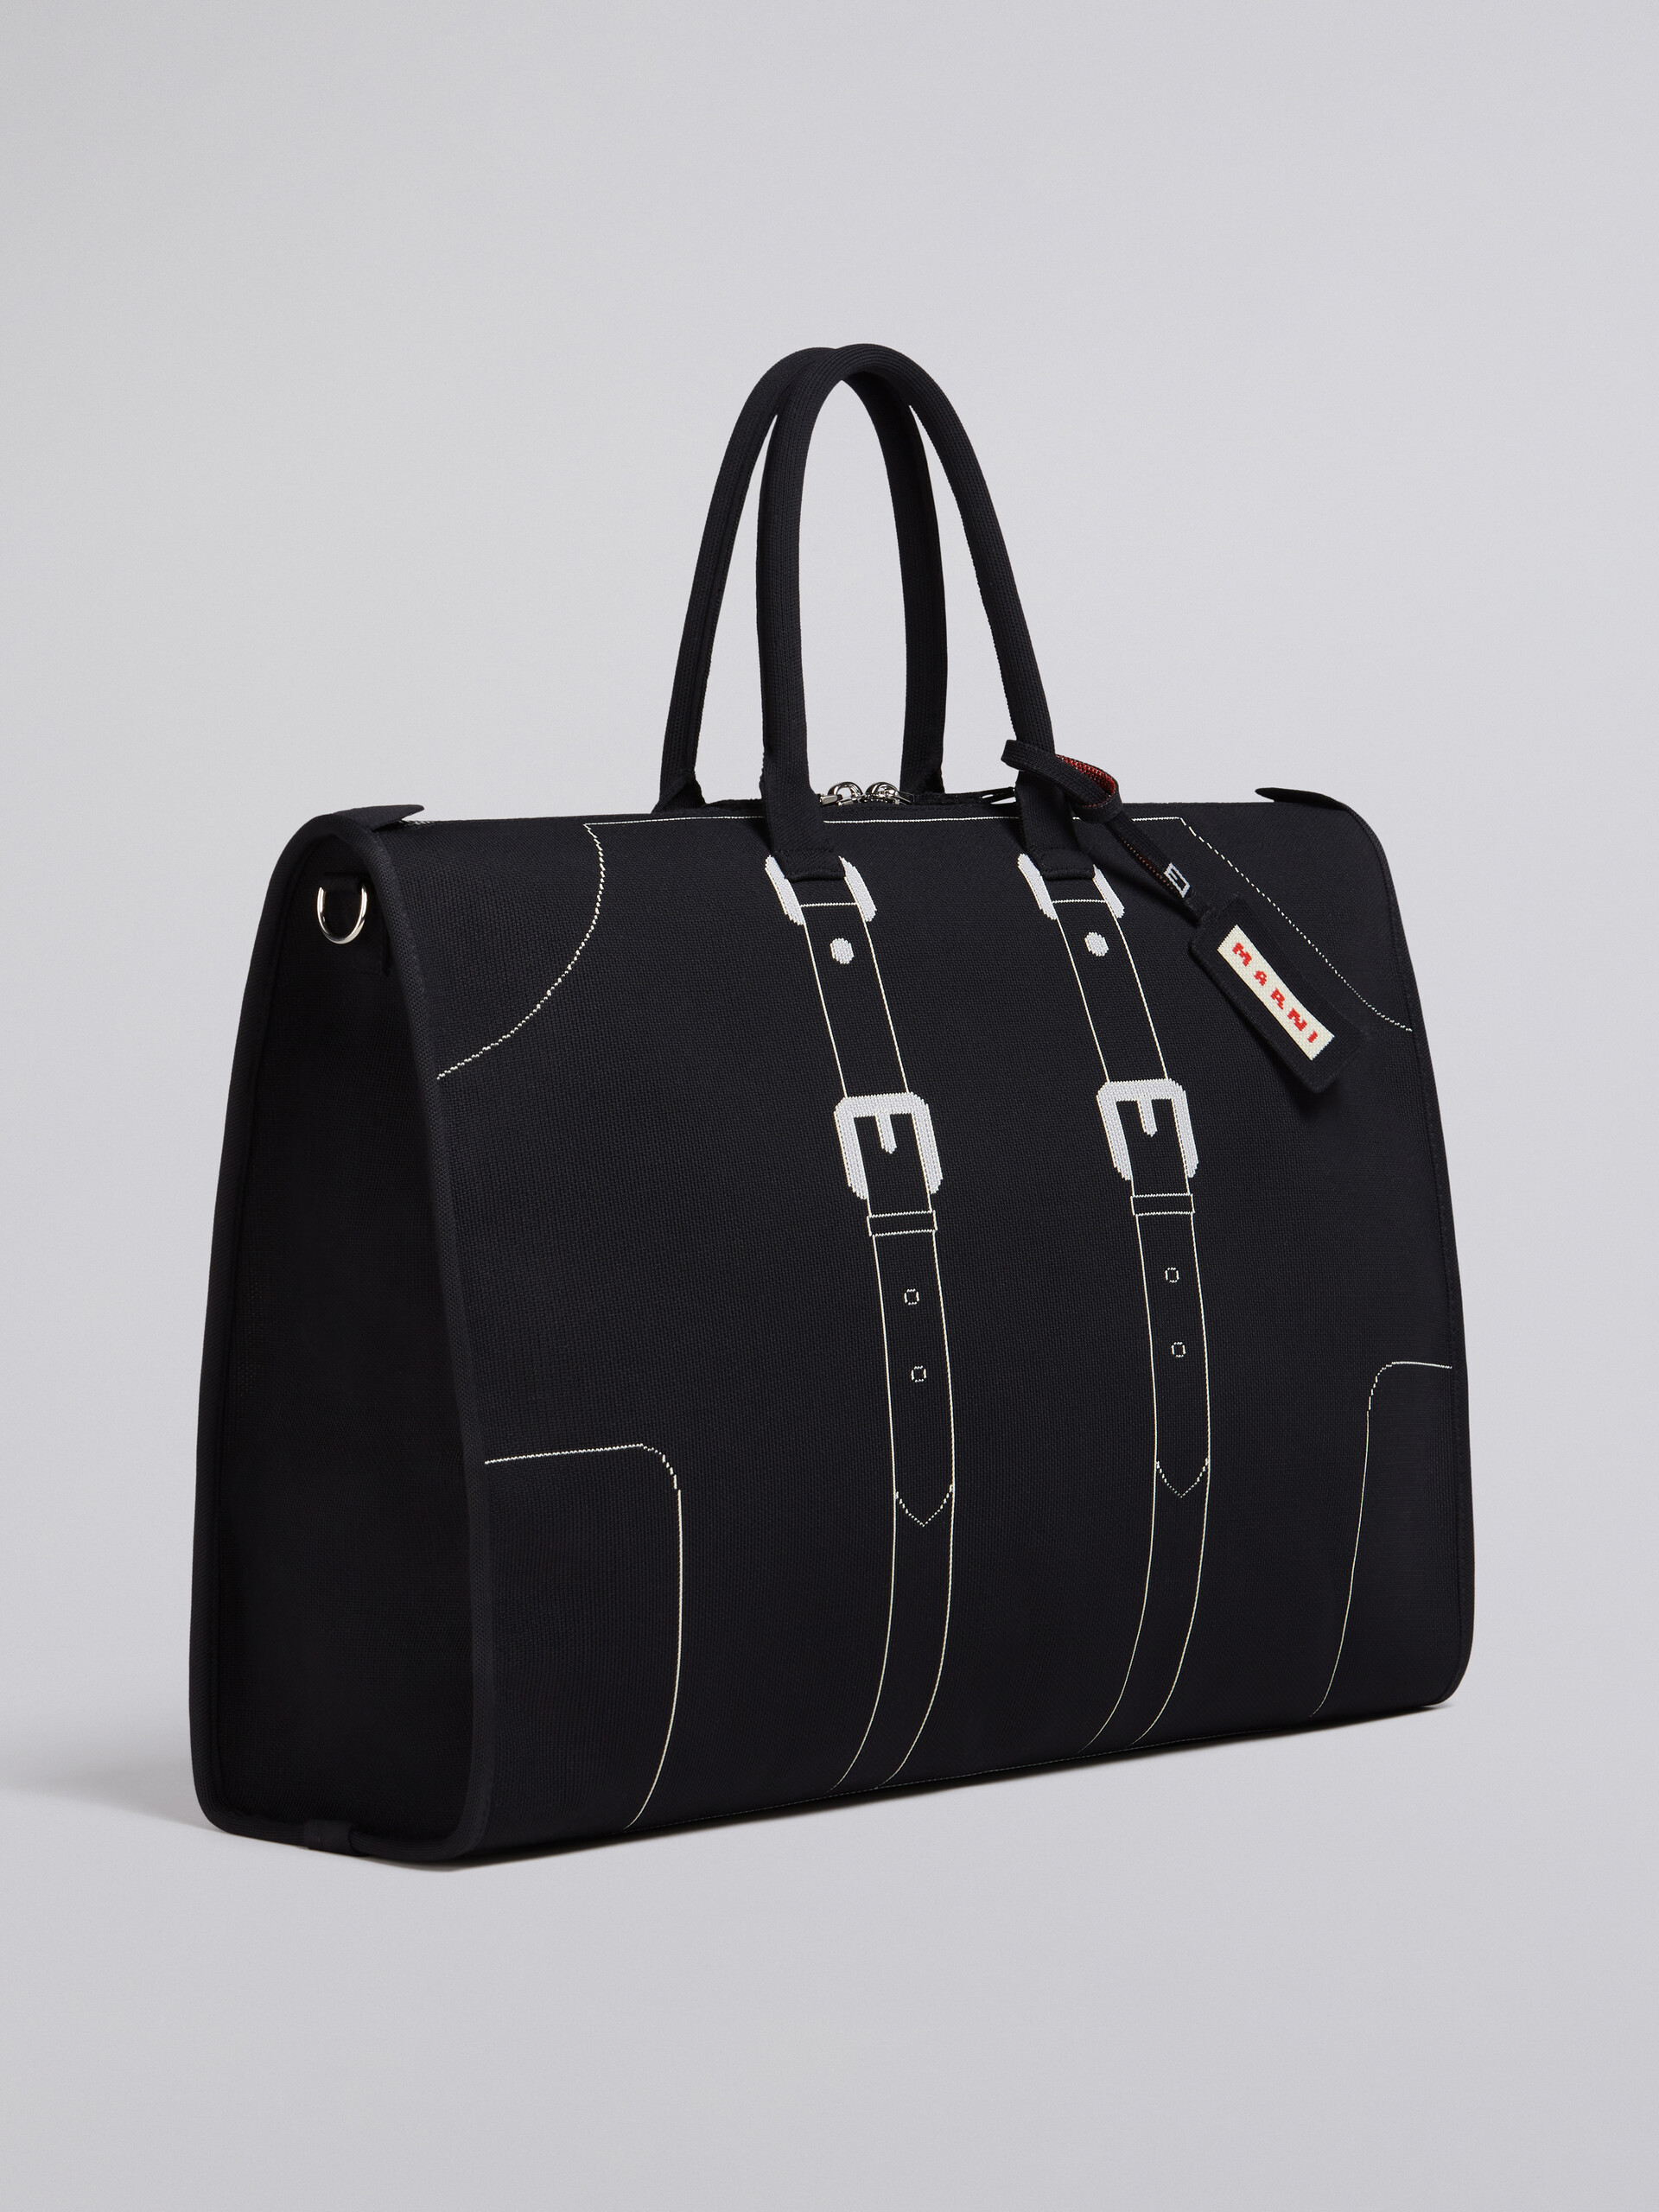 Black trompe-l'œil jacquard travel bag - Travelling Bag - Image 6